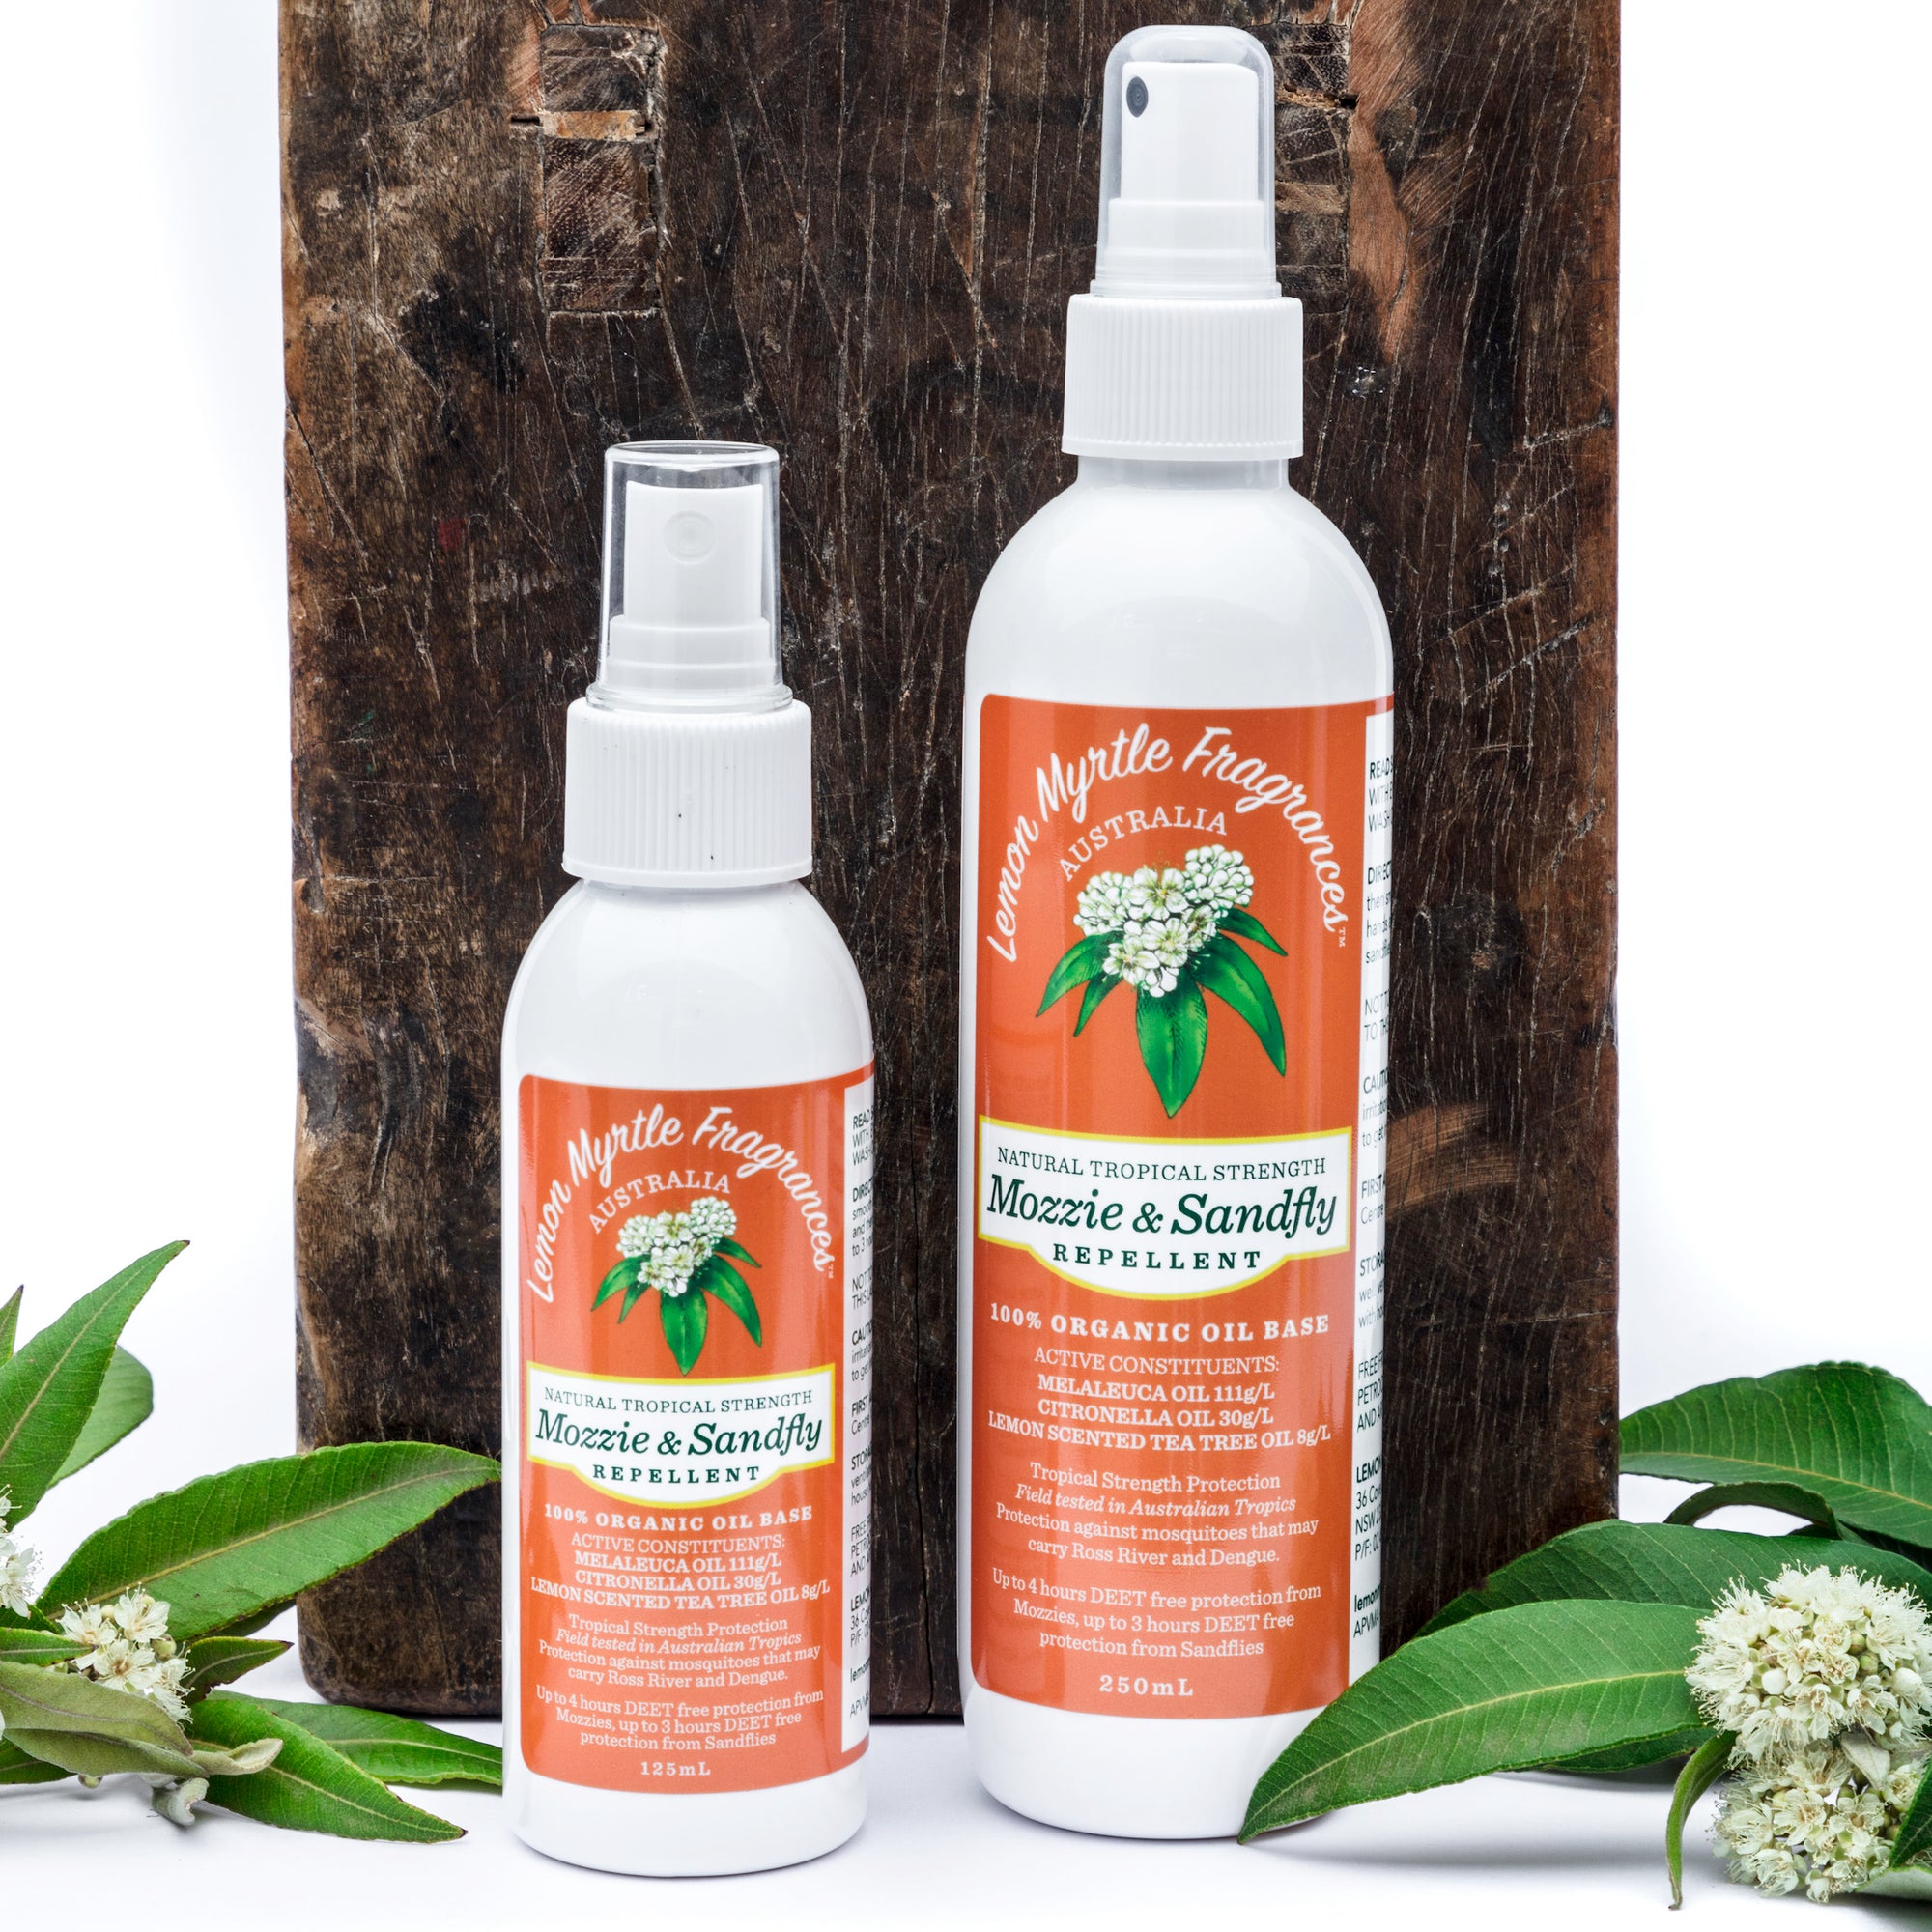 Lemon Myrtle Fragrances Natural Tropical Strength Mozzie & Sandfly Repellent